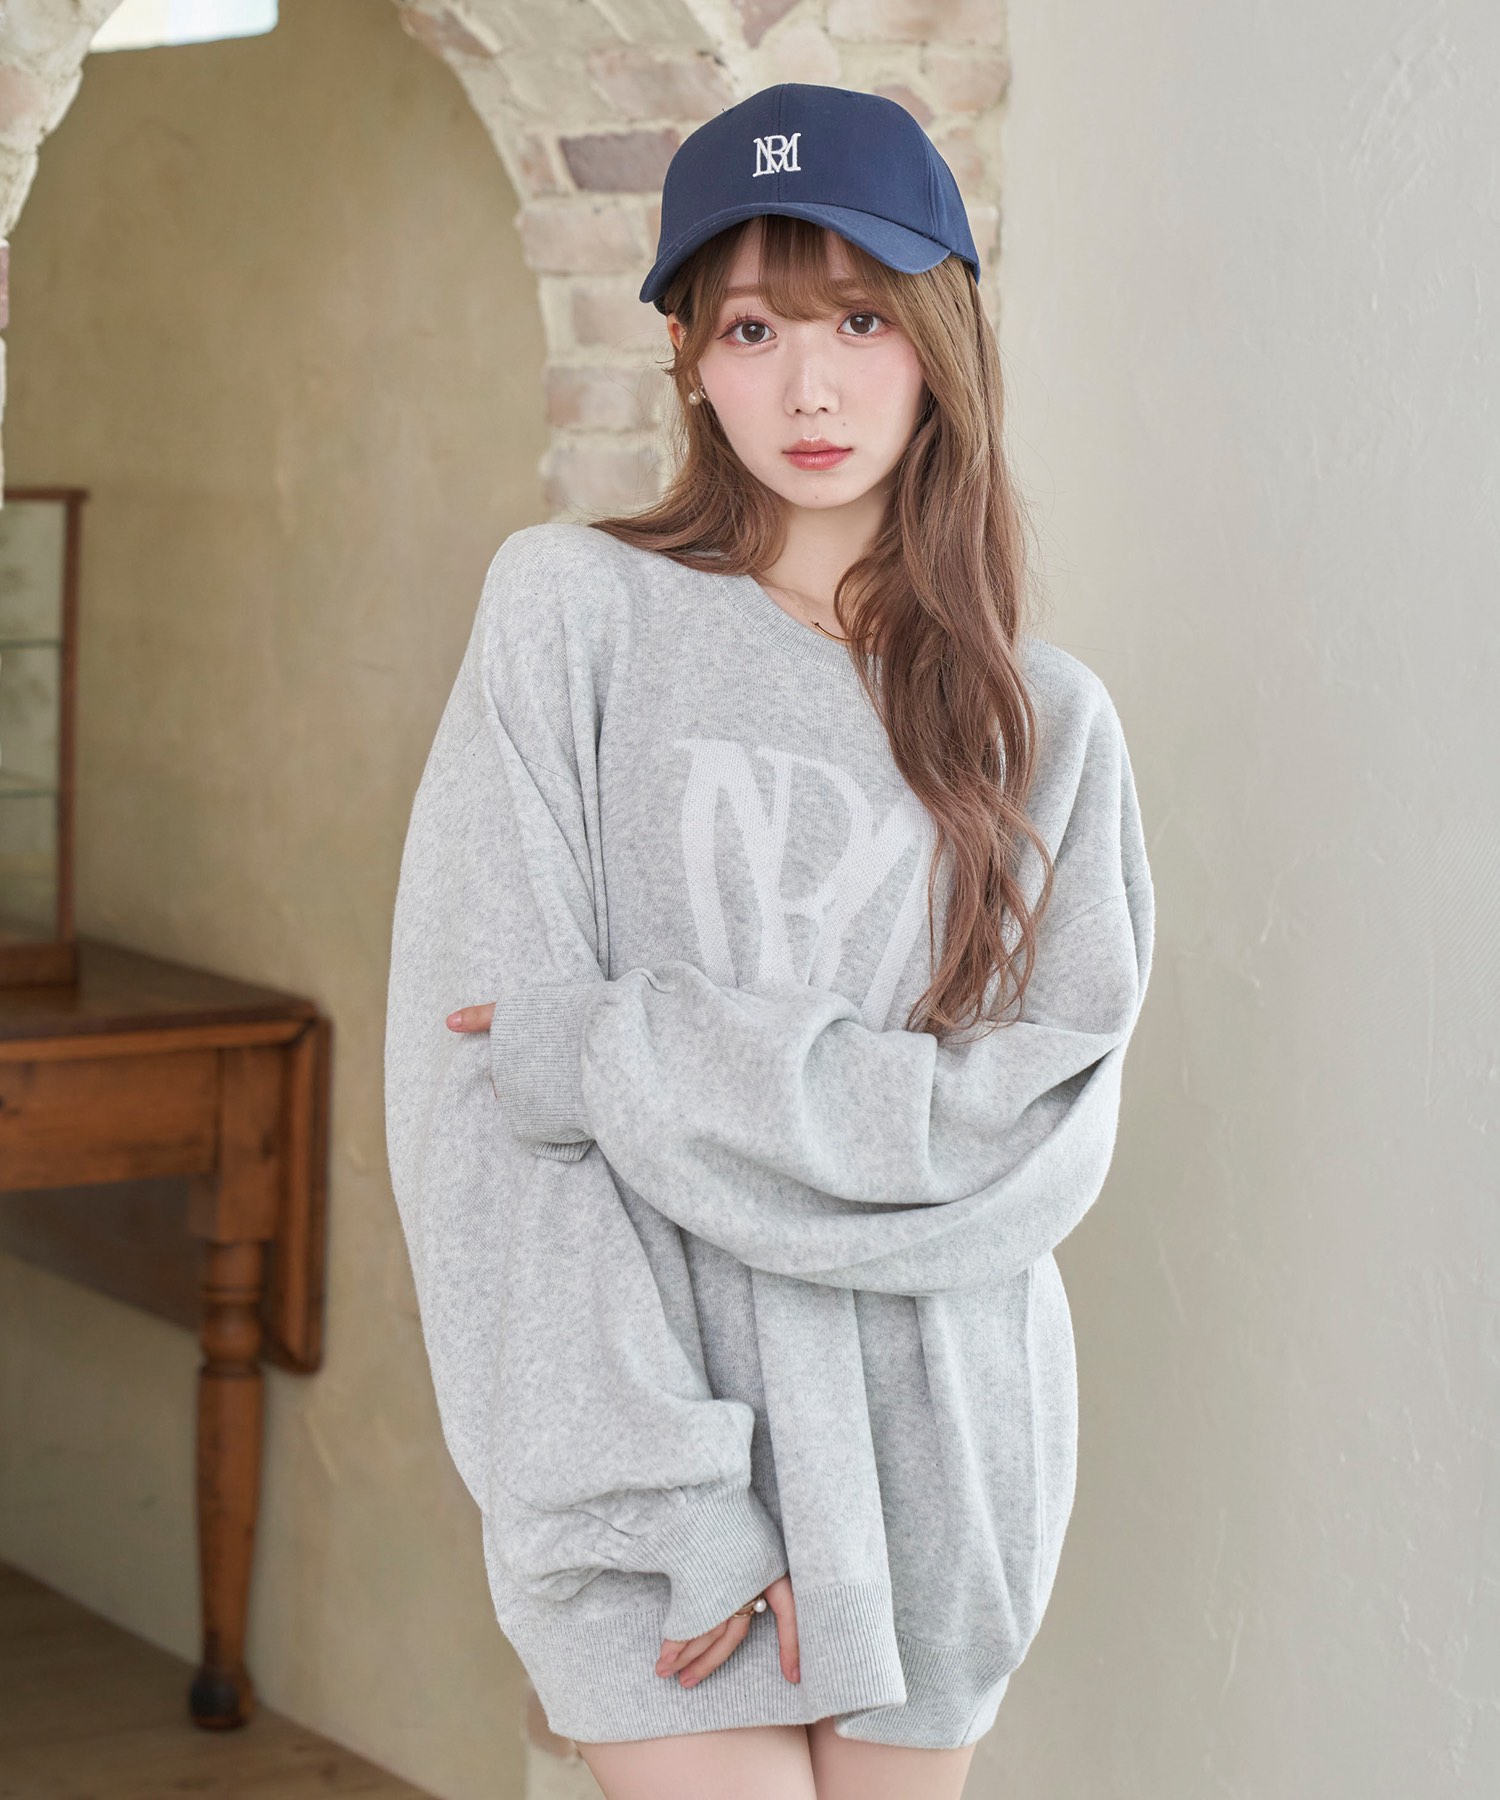 Rosé Muse RM logo knit_L size【white】-